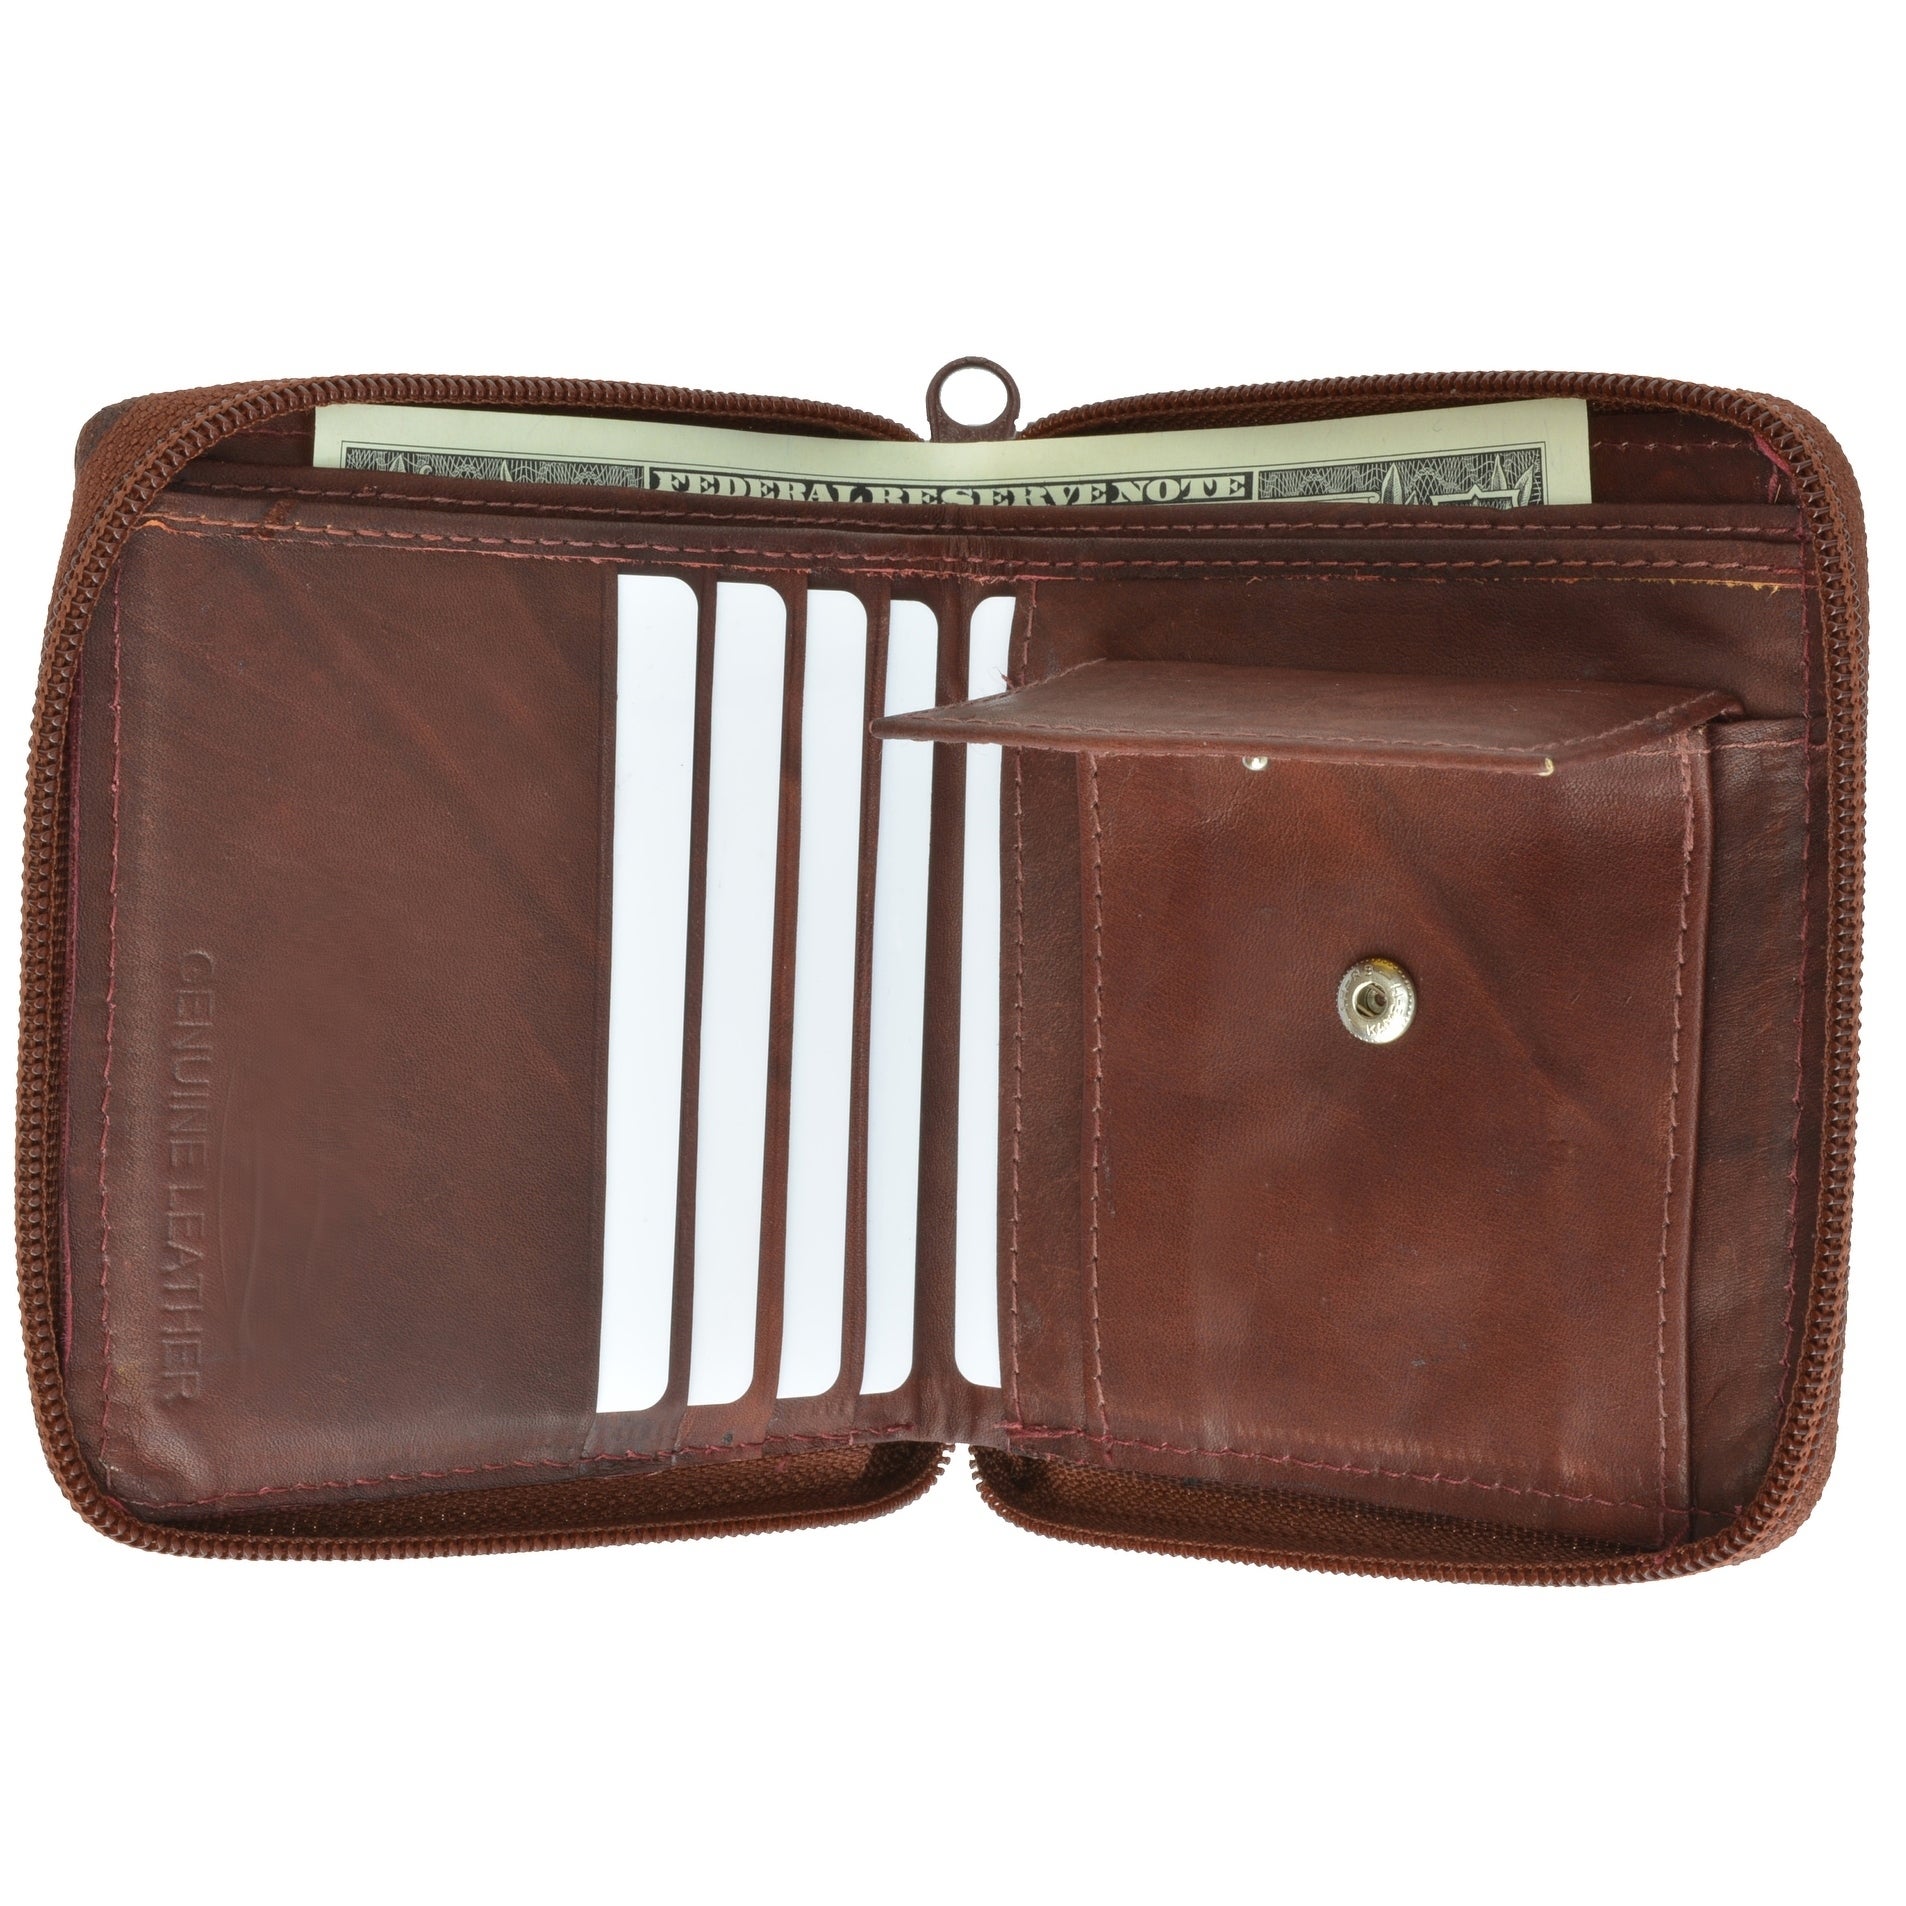 AFONiE Secure Zip Around Men Leather Wallet